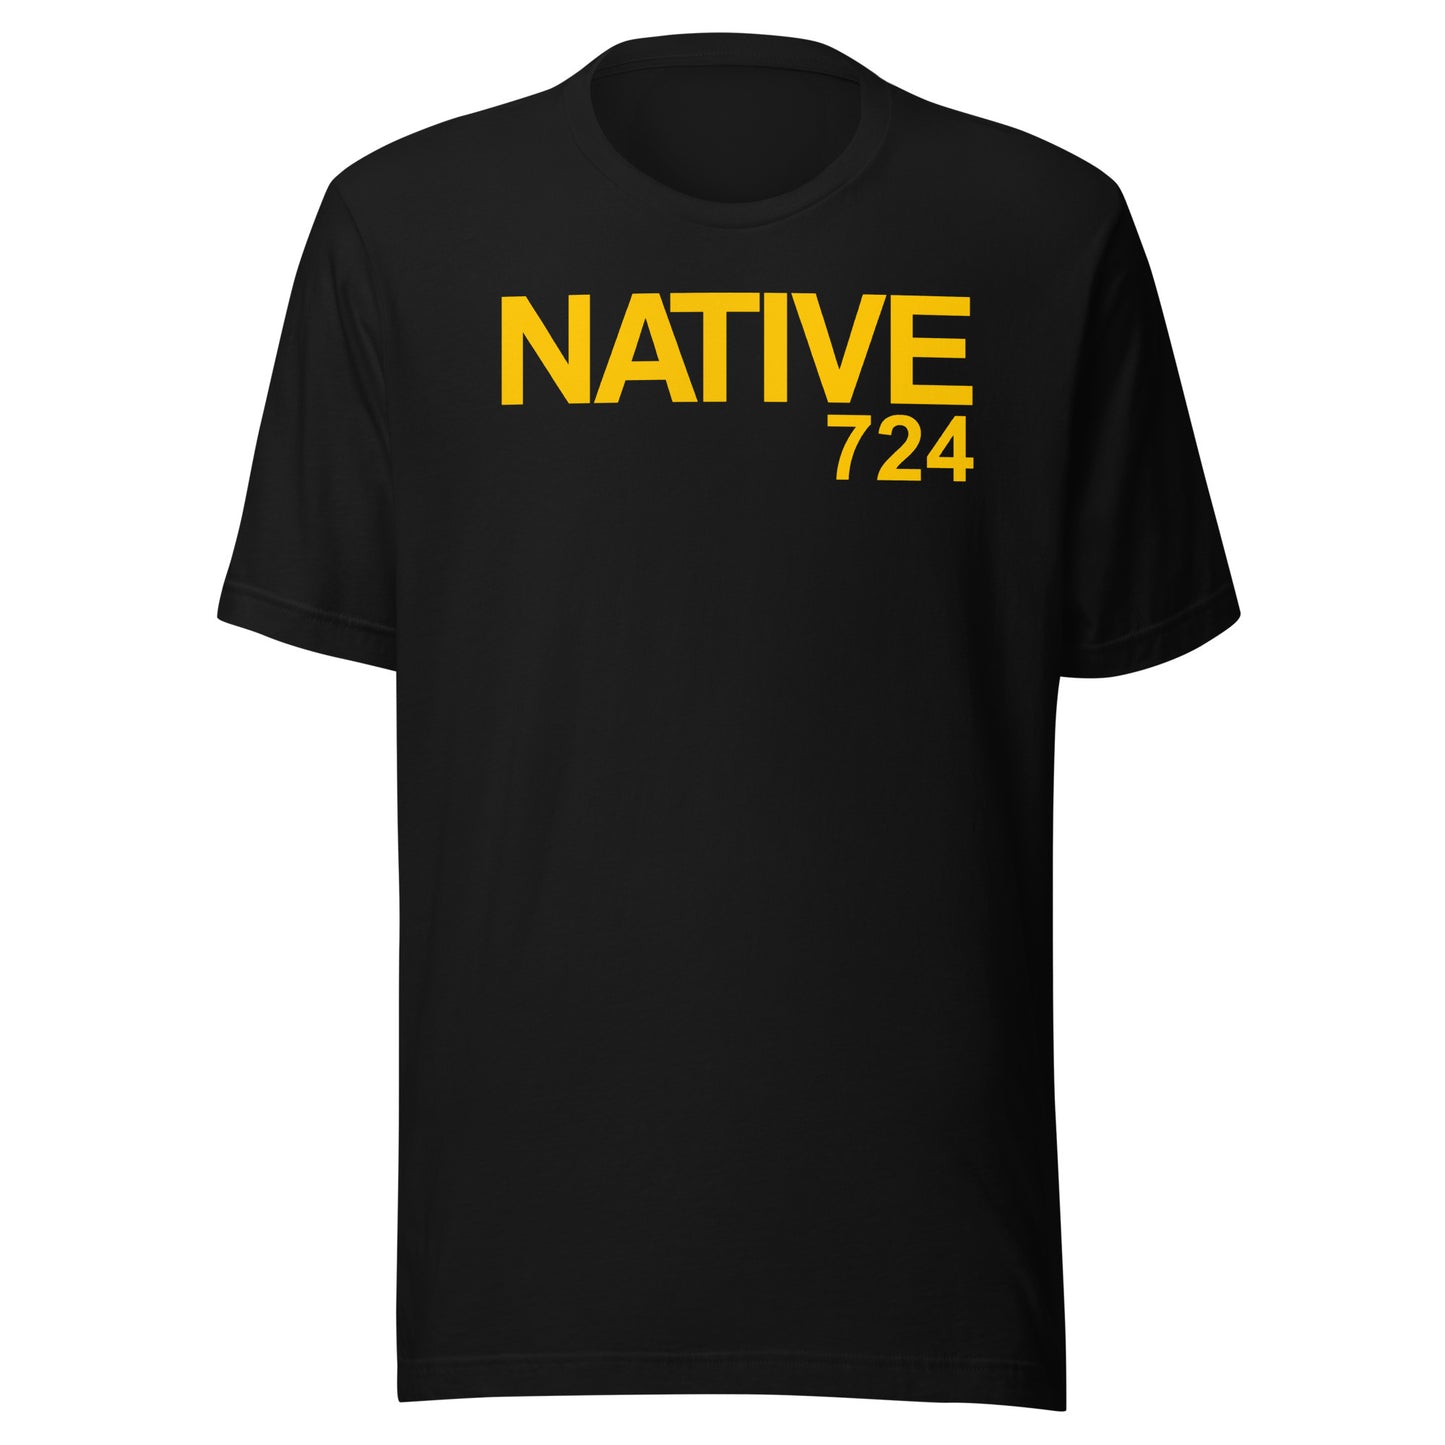 NATIVE 724 Classic Black & Gold T-Shirt